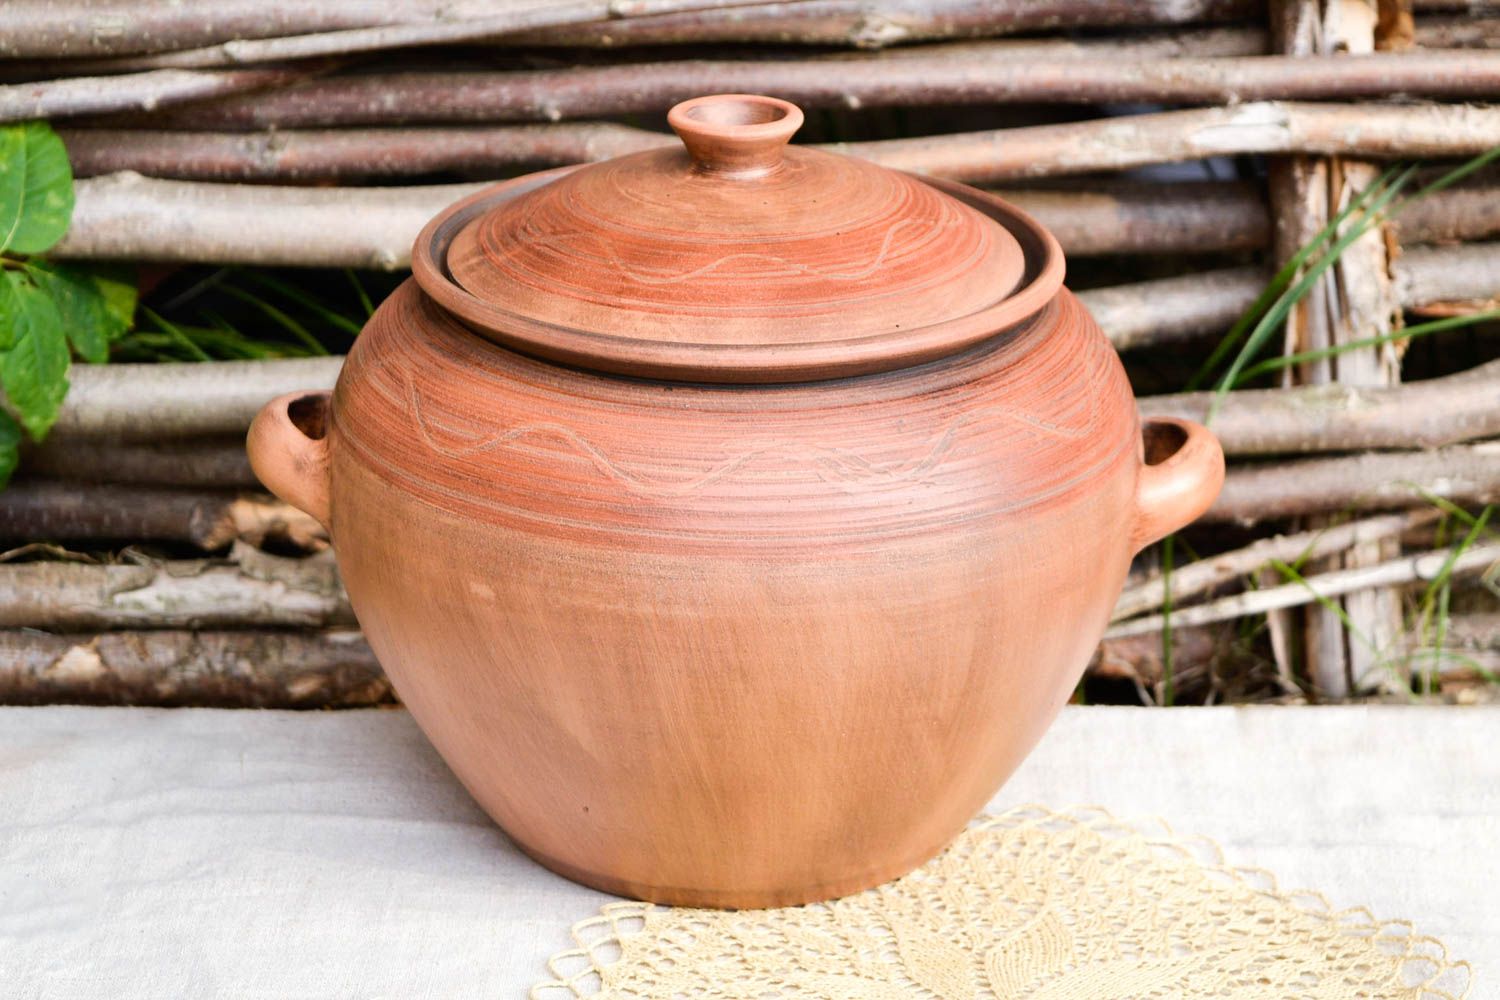 Handmade ceramic pot for baking pottery pot ethnic pottery kitchen decor photo 1